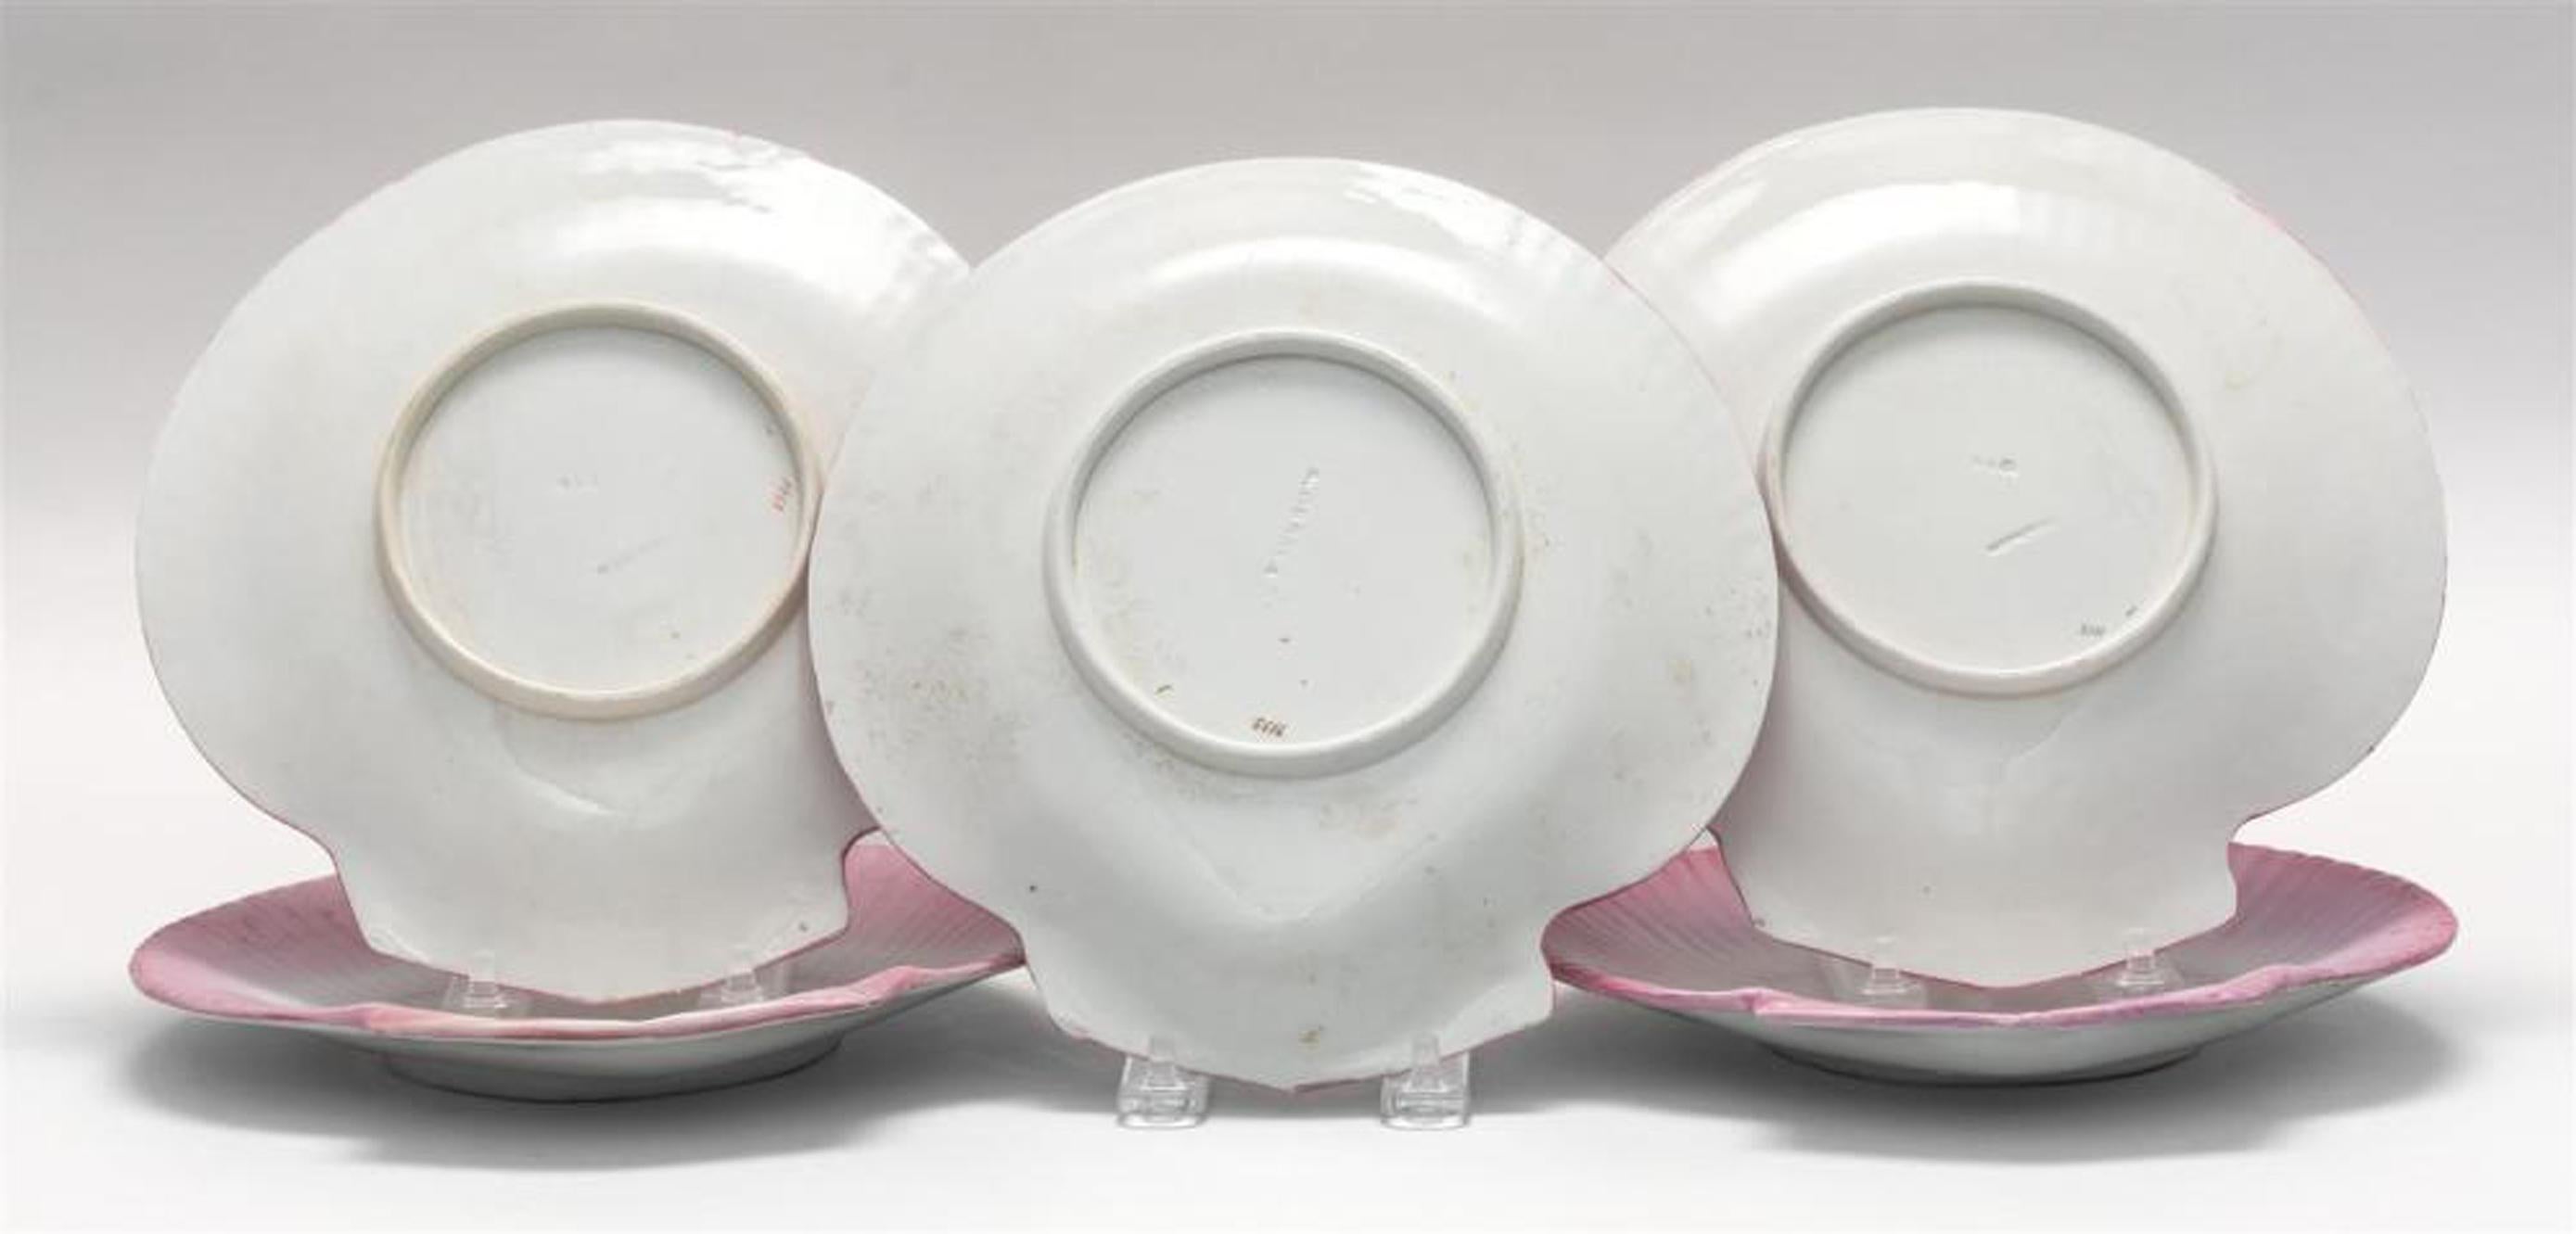 Wedgwood pottery pearlware scallop-shaped set of five plates,
Nautilus pattern,
1820-1845.
A set of five scallop-shaped pearlware plates by Wedgwood

Reference: Wedgwood: Its Competitors & Imitators 1800-1830, Wedgwood International Seminar,